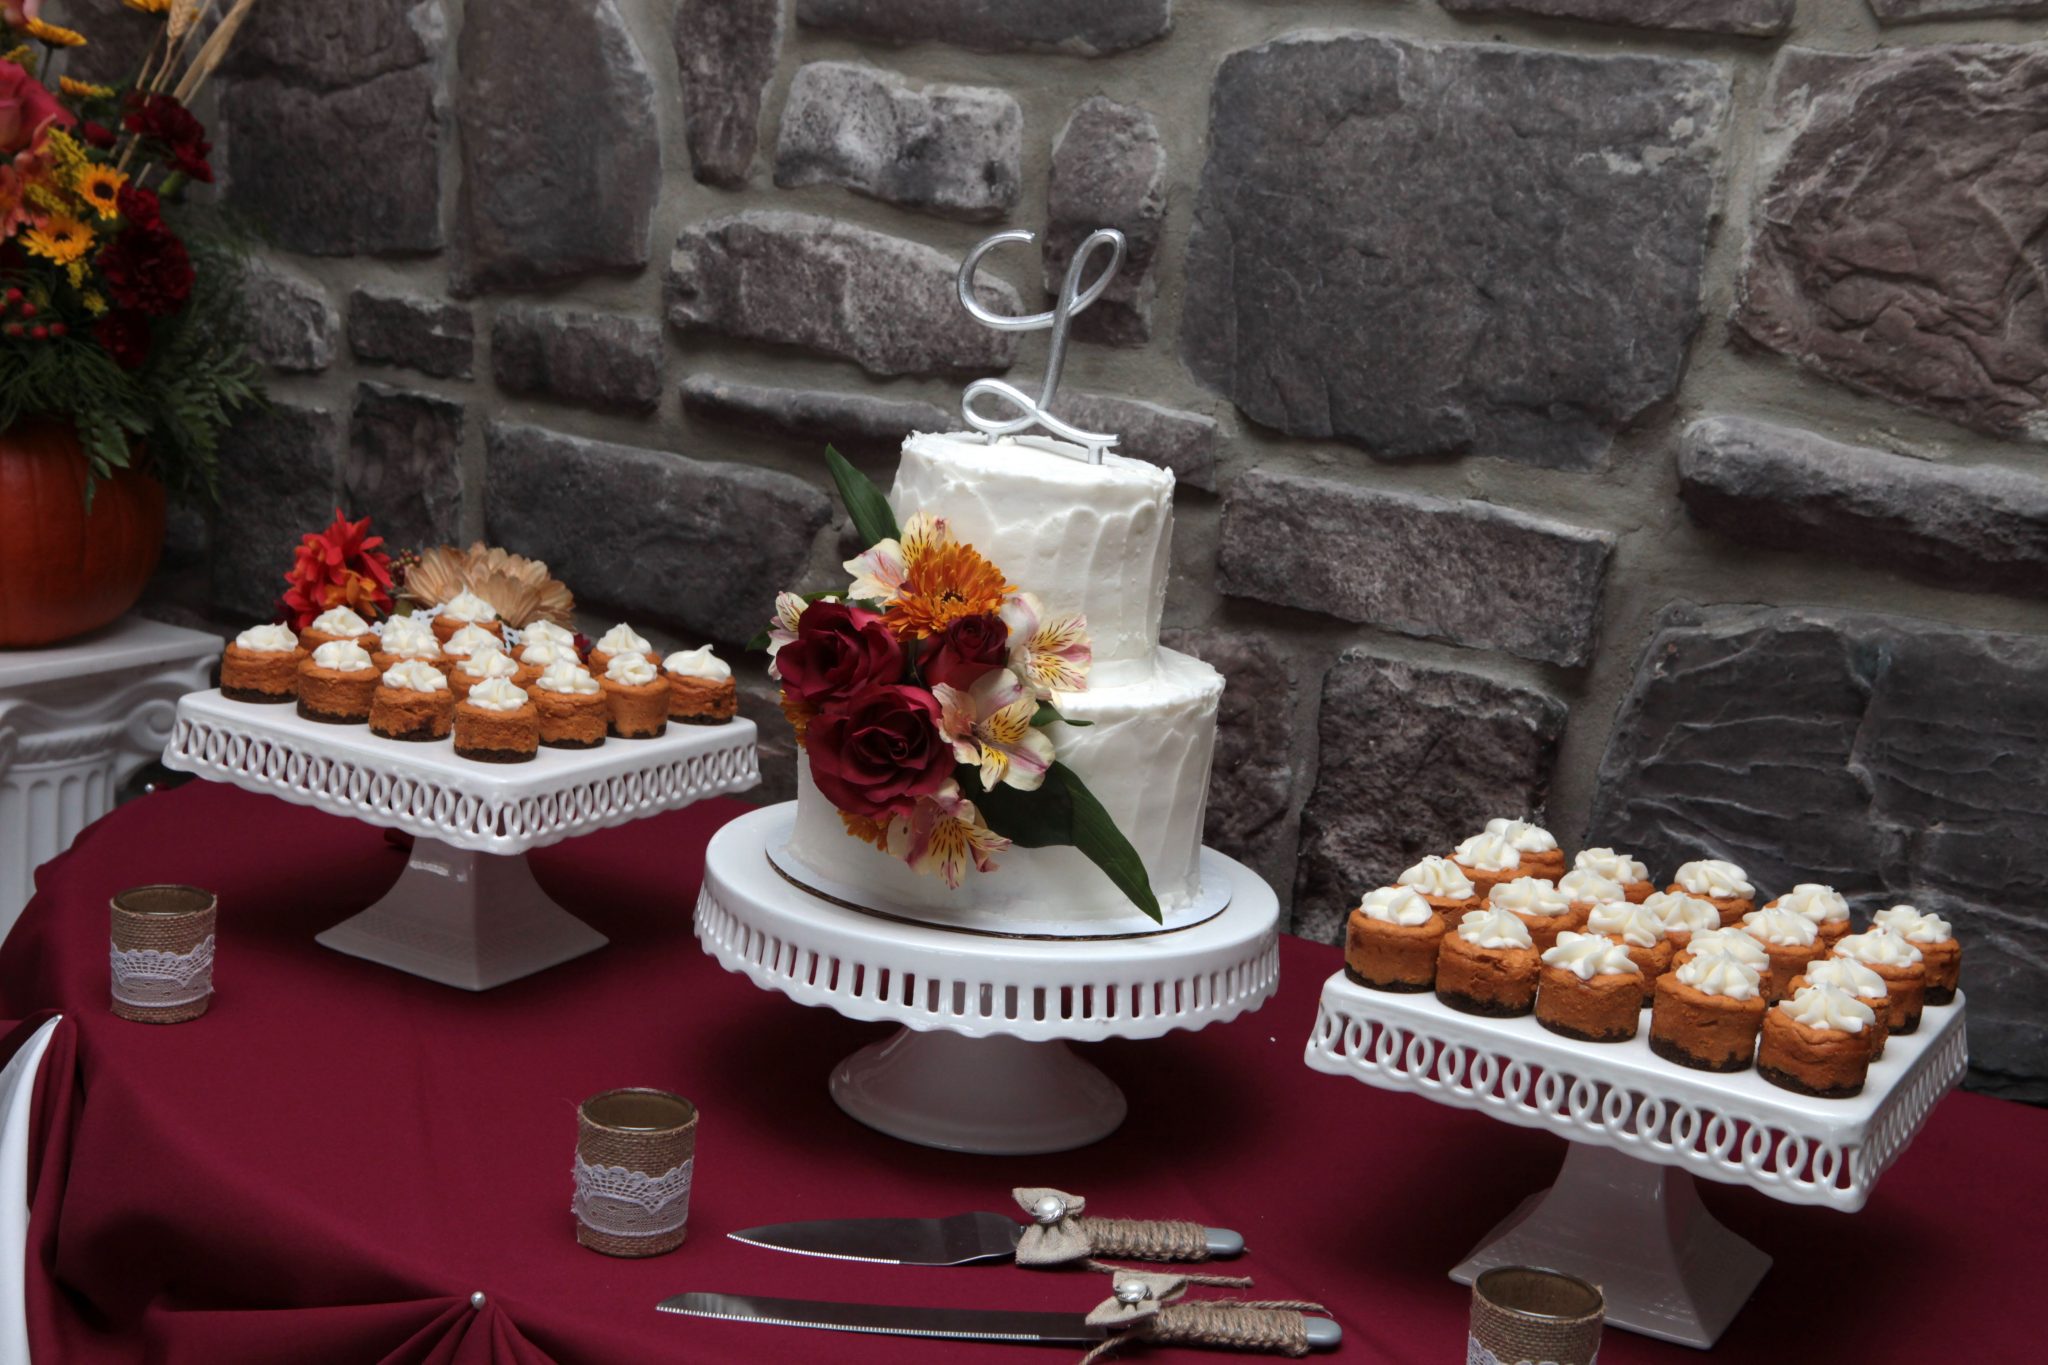 October wedding ideas combining wedding cake with cupcakes